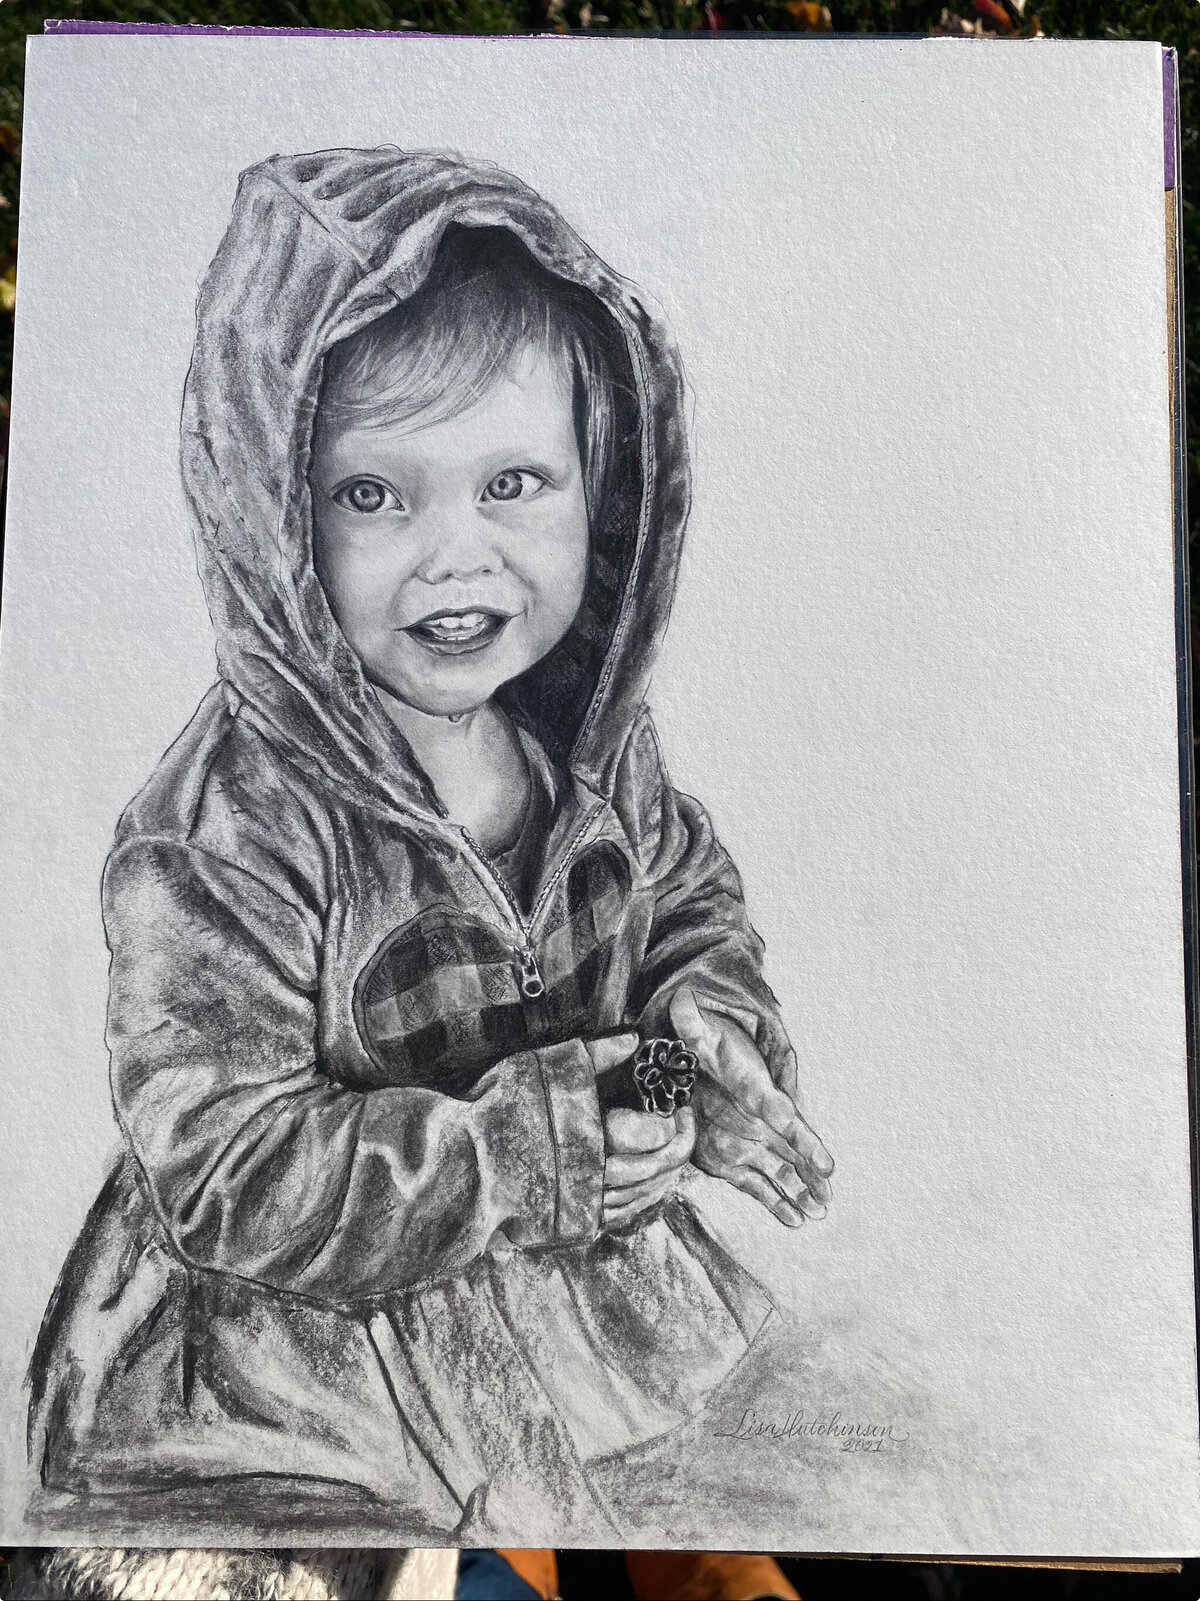 Charcoal portrait of a boy